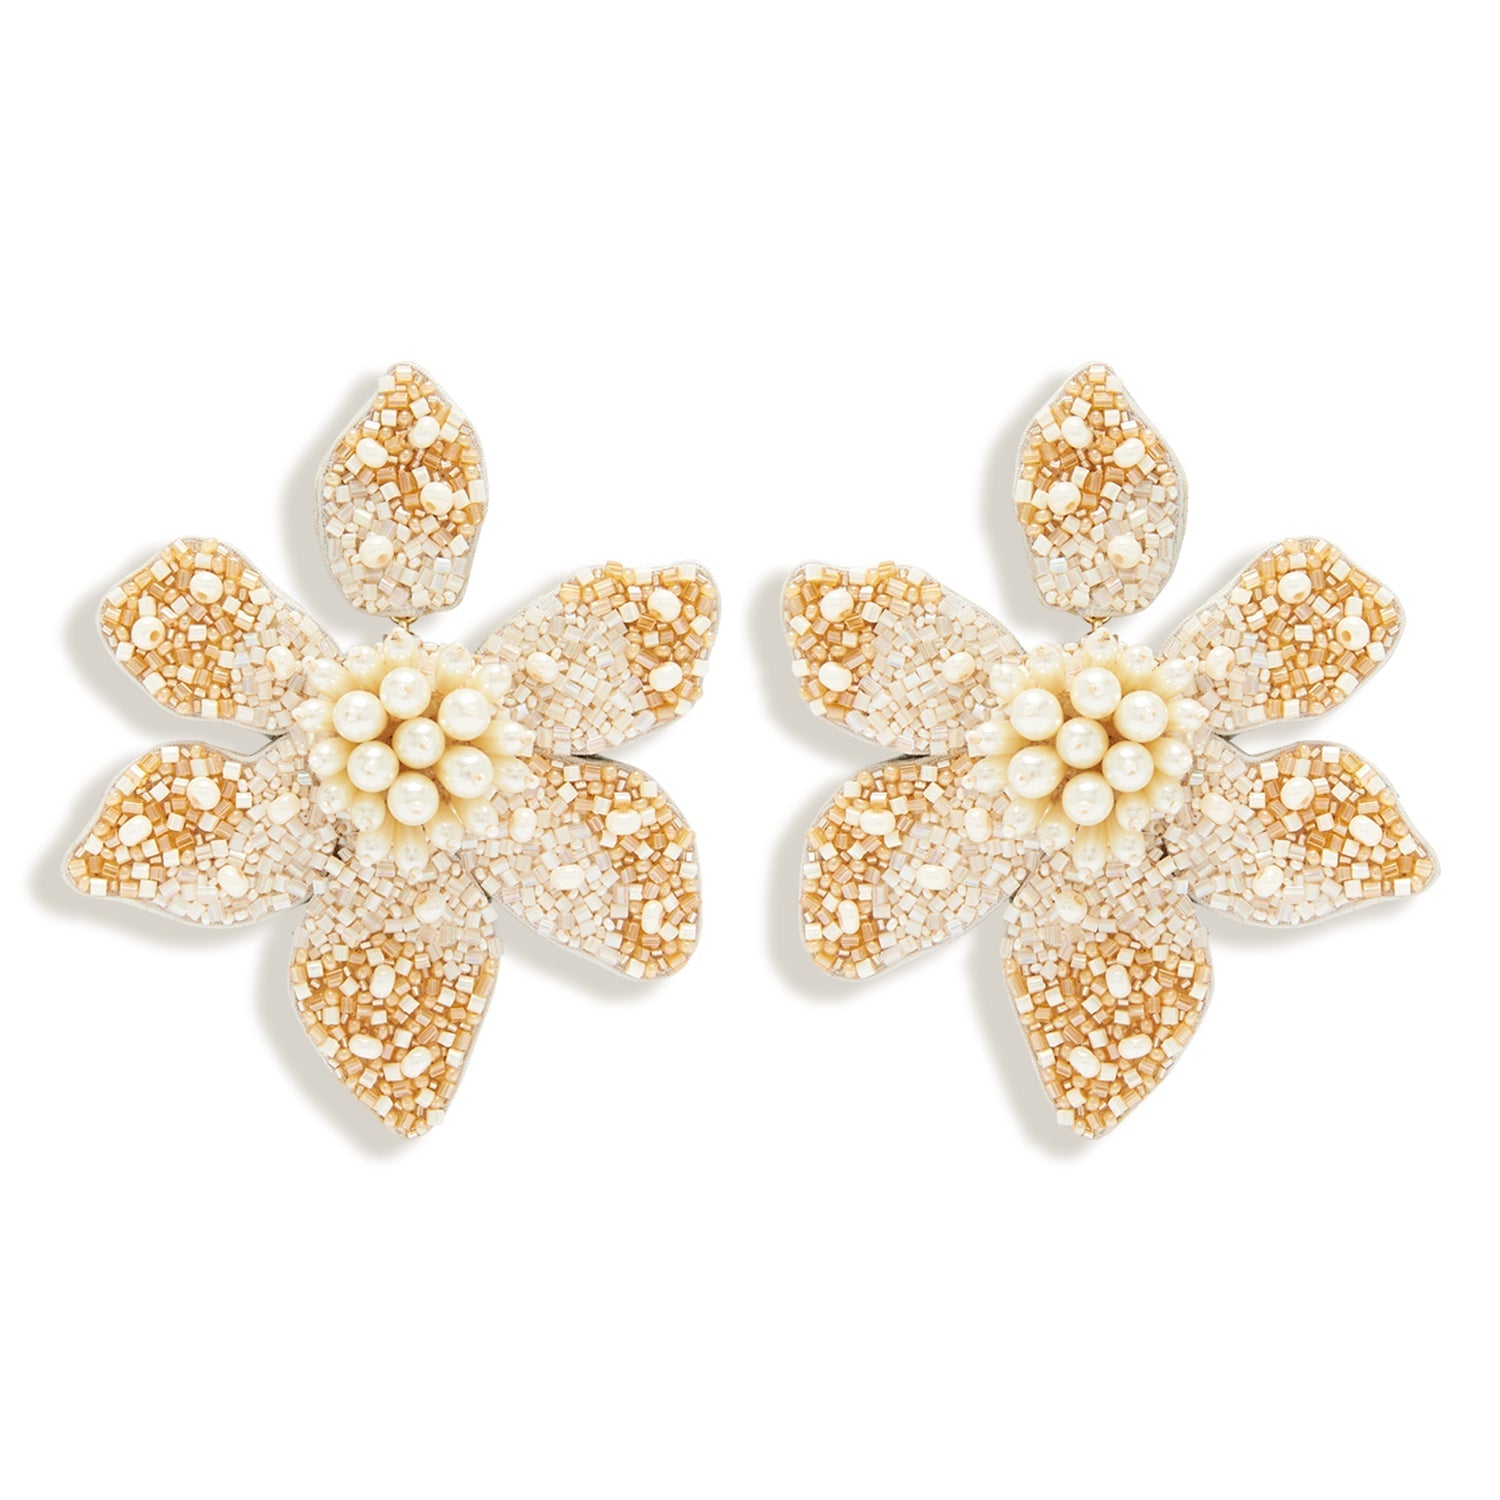 Camellia Pearl Earrings Cream by Mignonne Gavigan